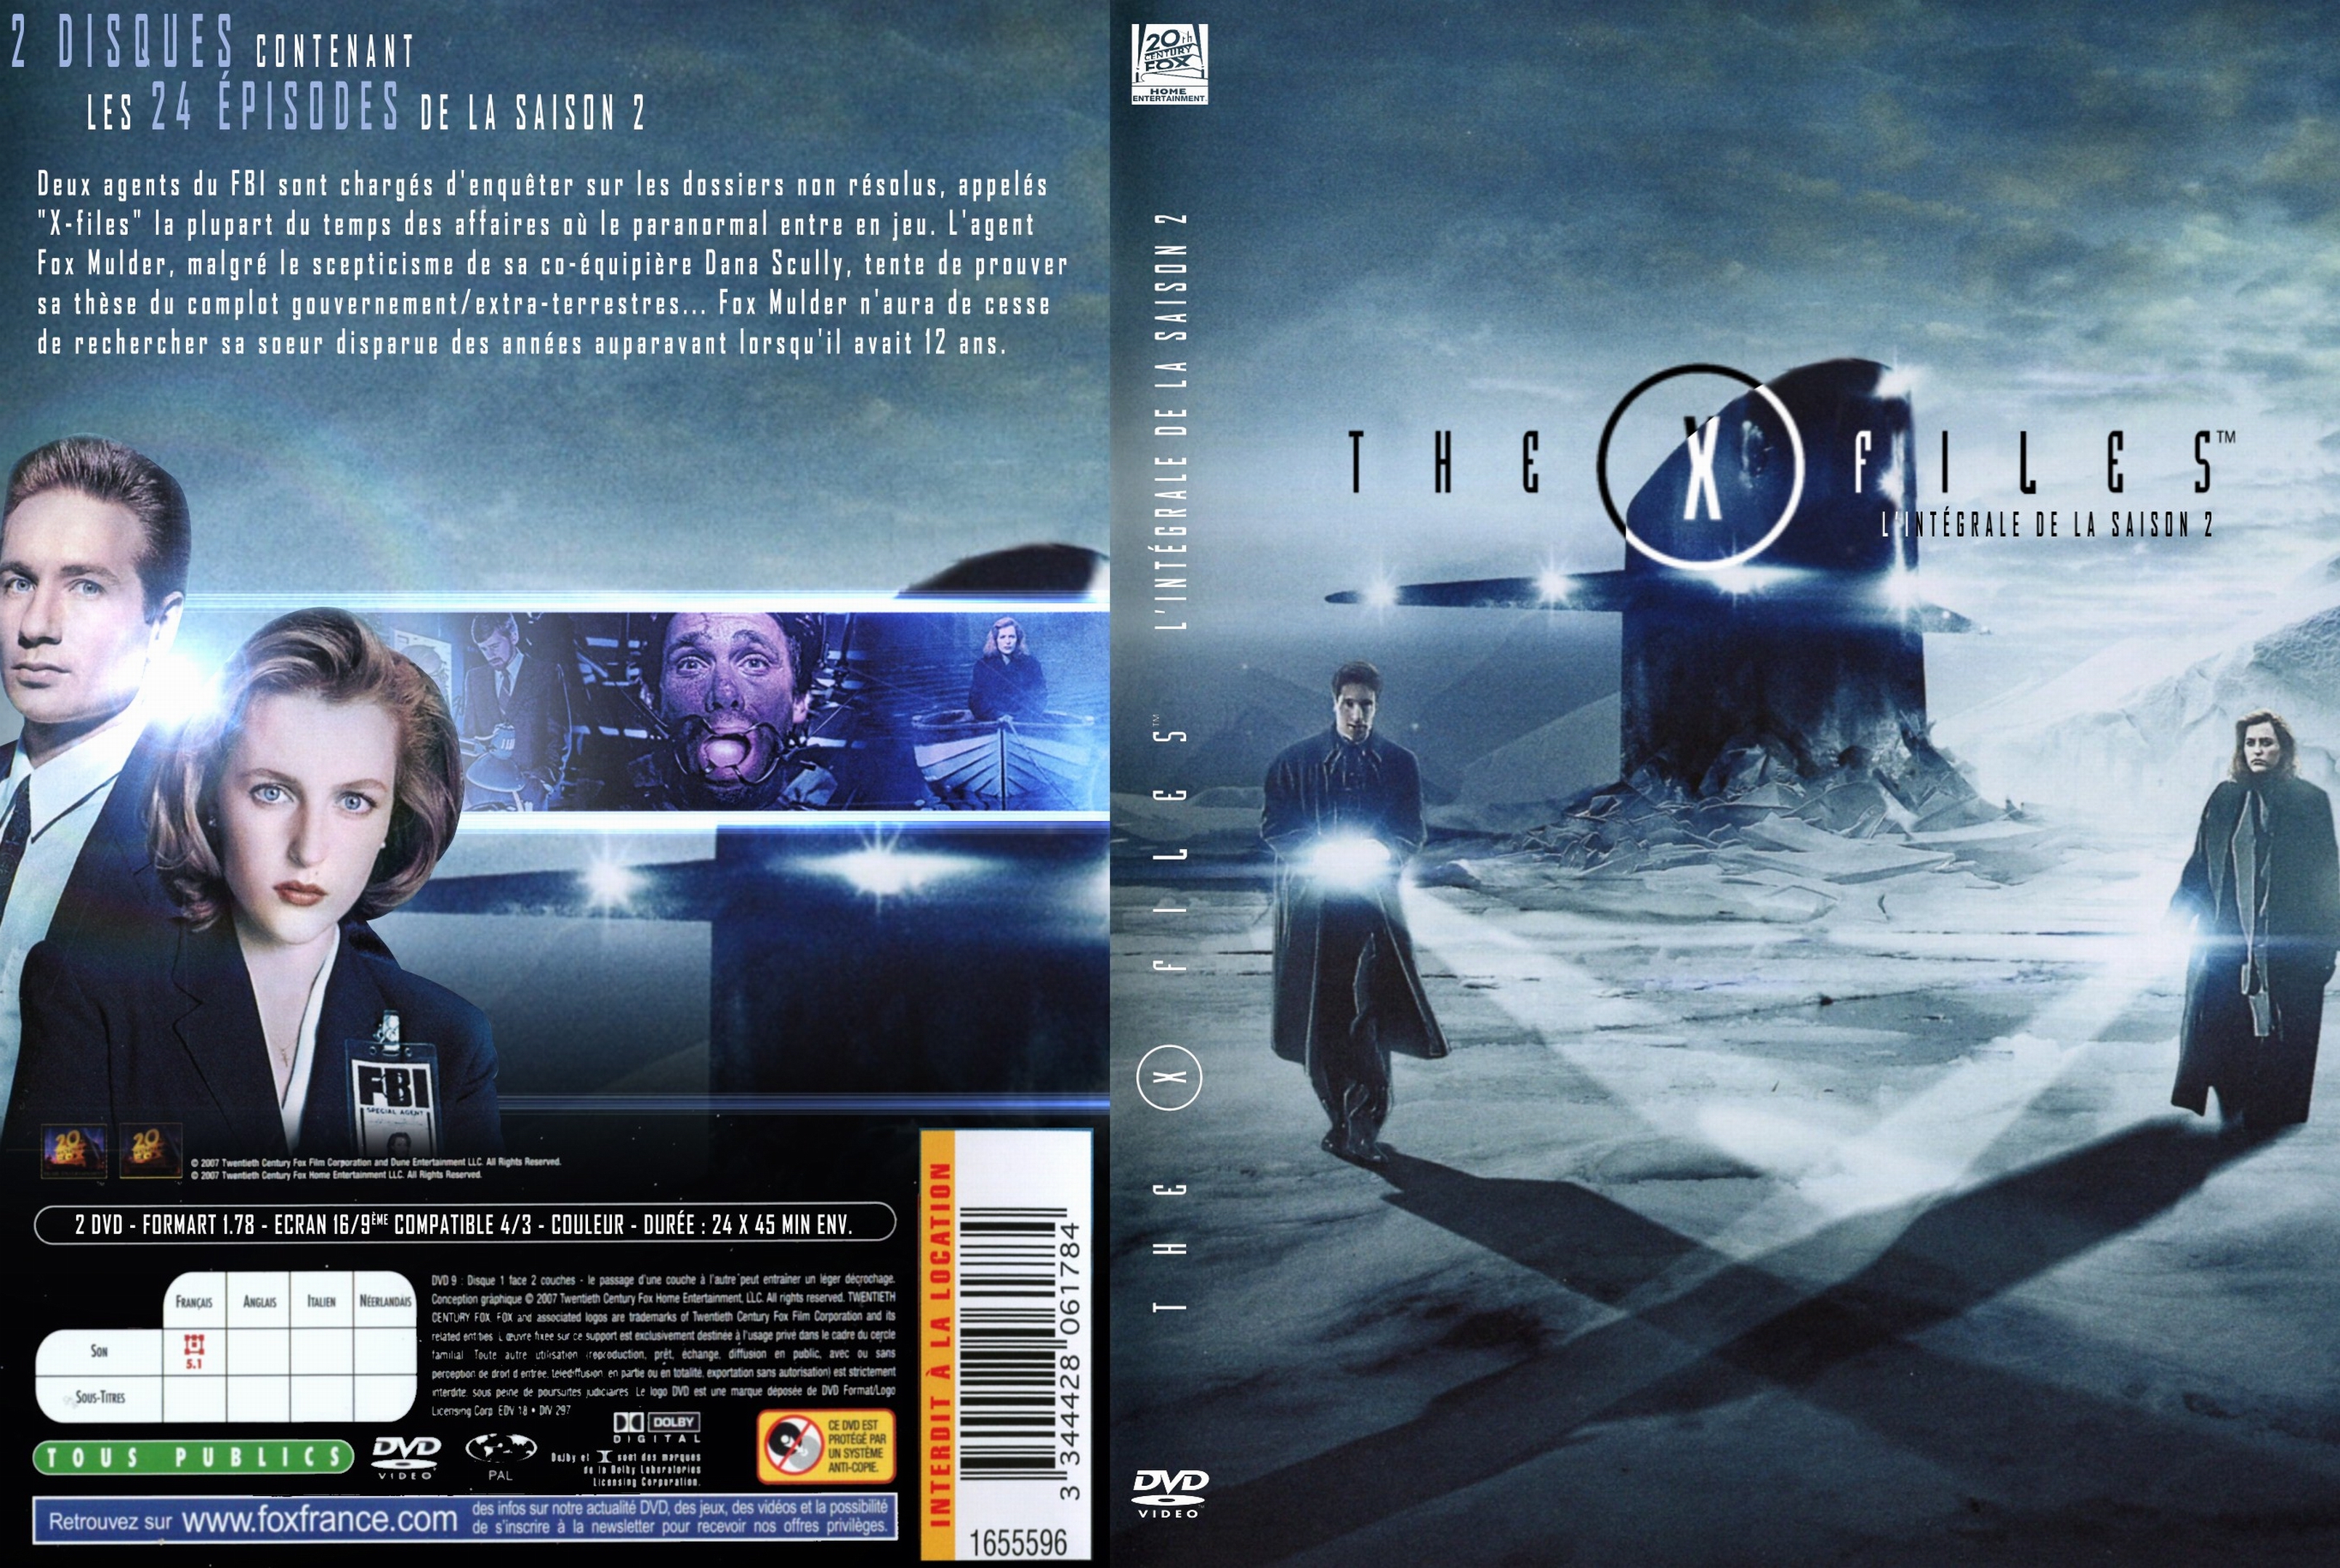 Jaquette DVD The X Files saison 2 custom